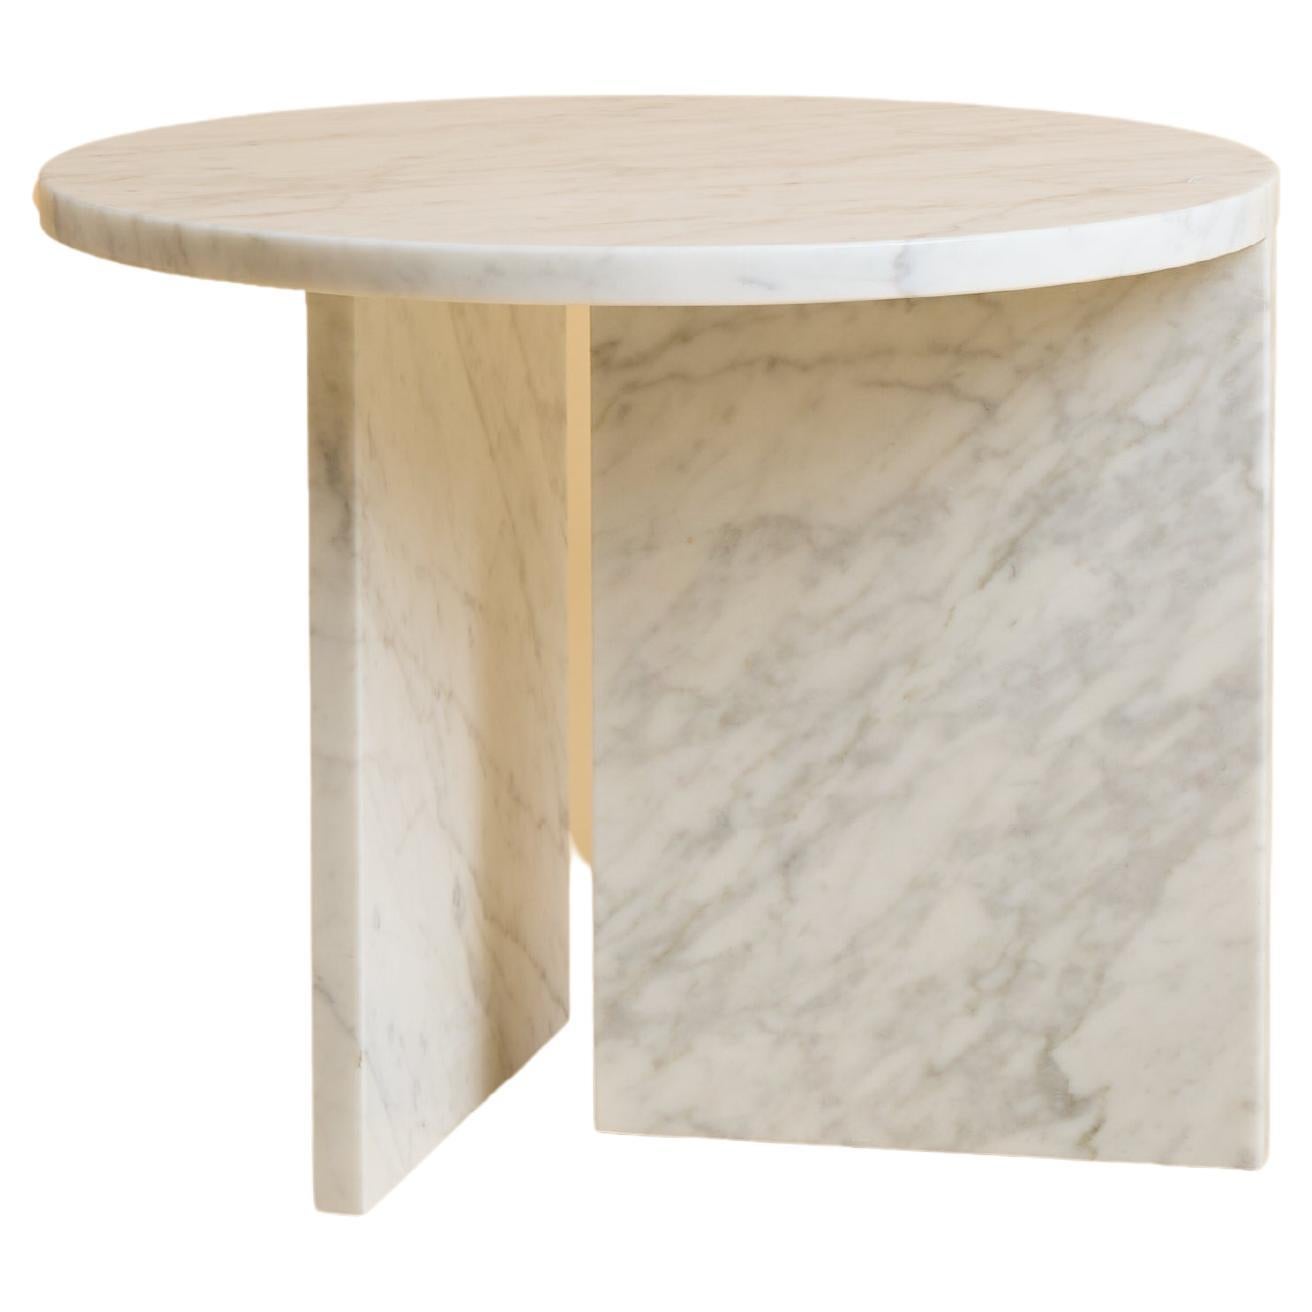 Table basse circulaire en marbre de Carrare, fabriquée en Italie en vente